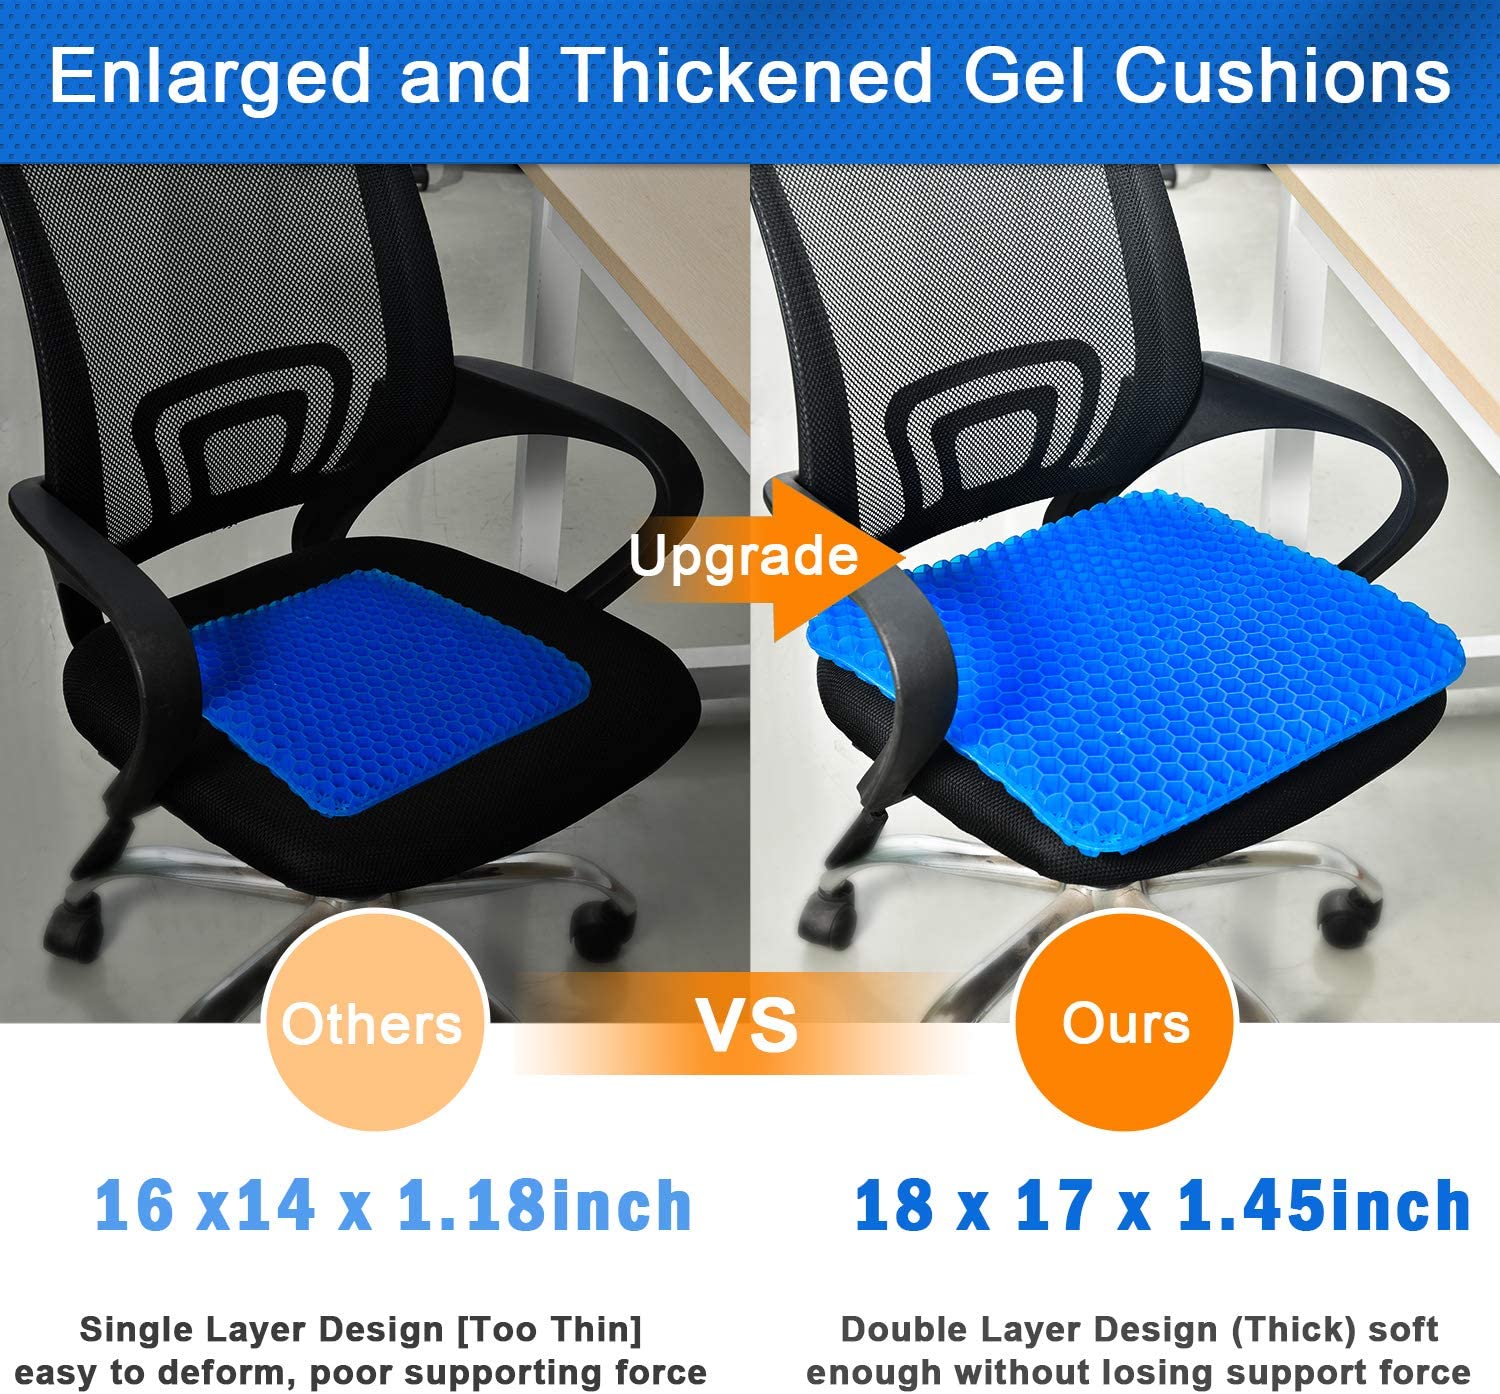 Quees Car Gel Seat Cushions, Office Chair Cushions Honeycomb